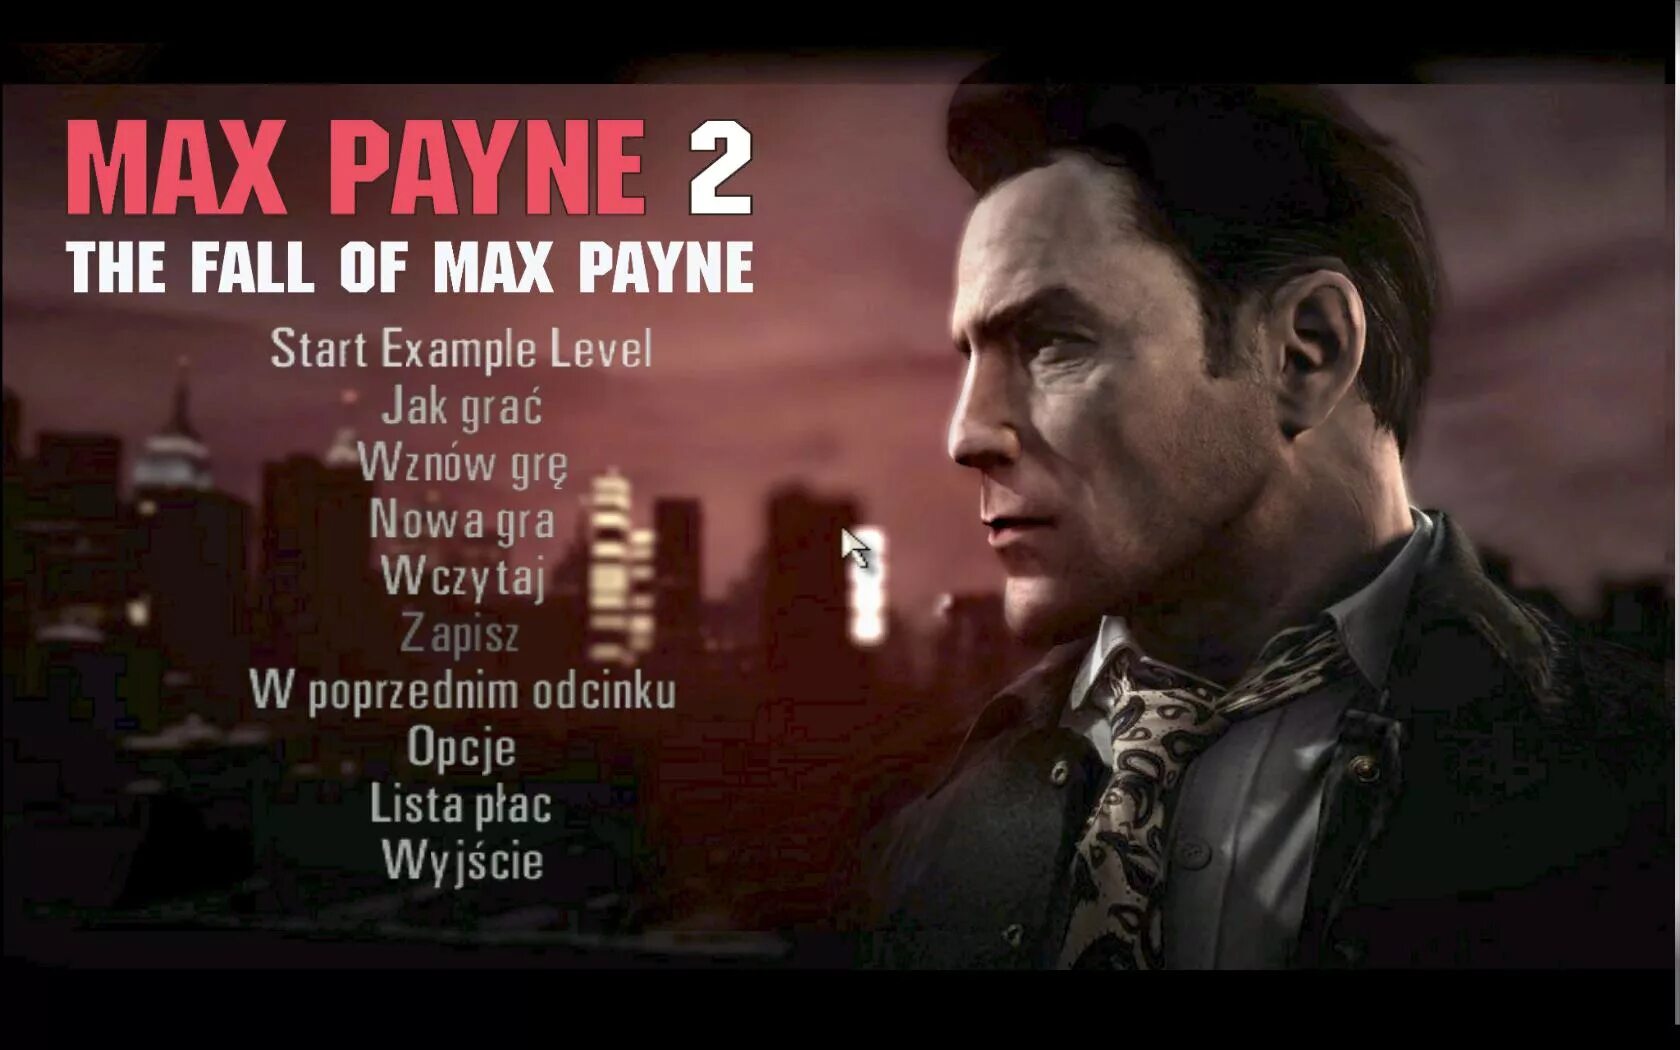 Max Payne 3 меню. Max Payne 1 меню. Max Payne 1 main menu. Меню игры Макс Пейн 3. Max main